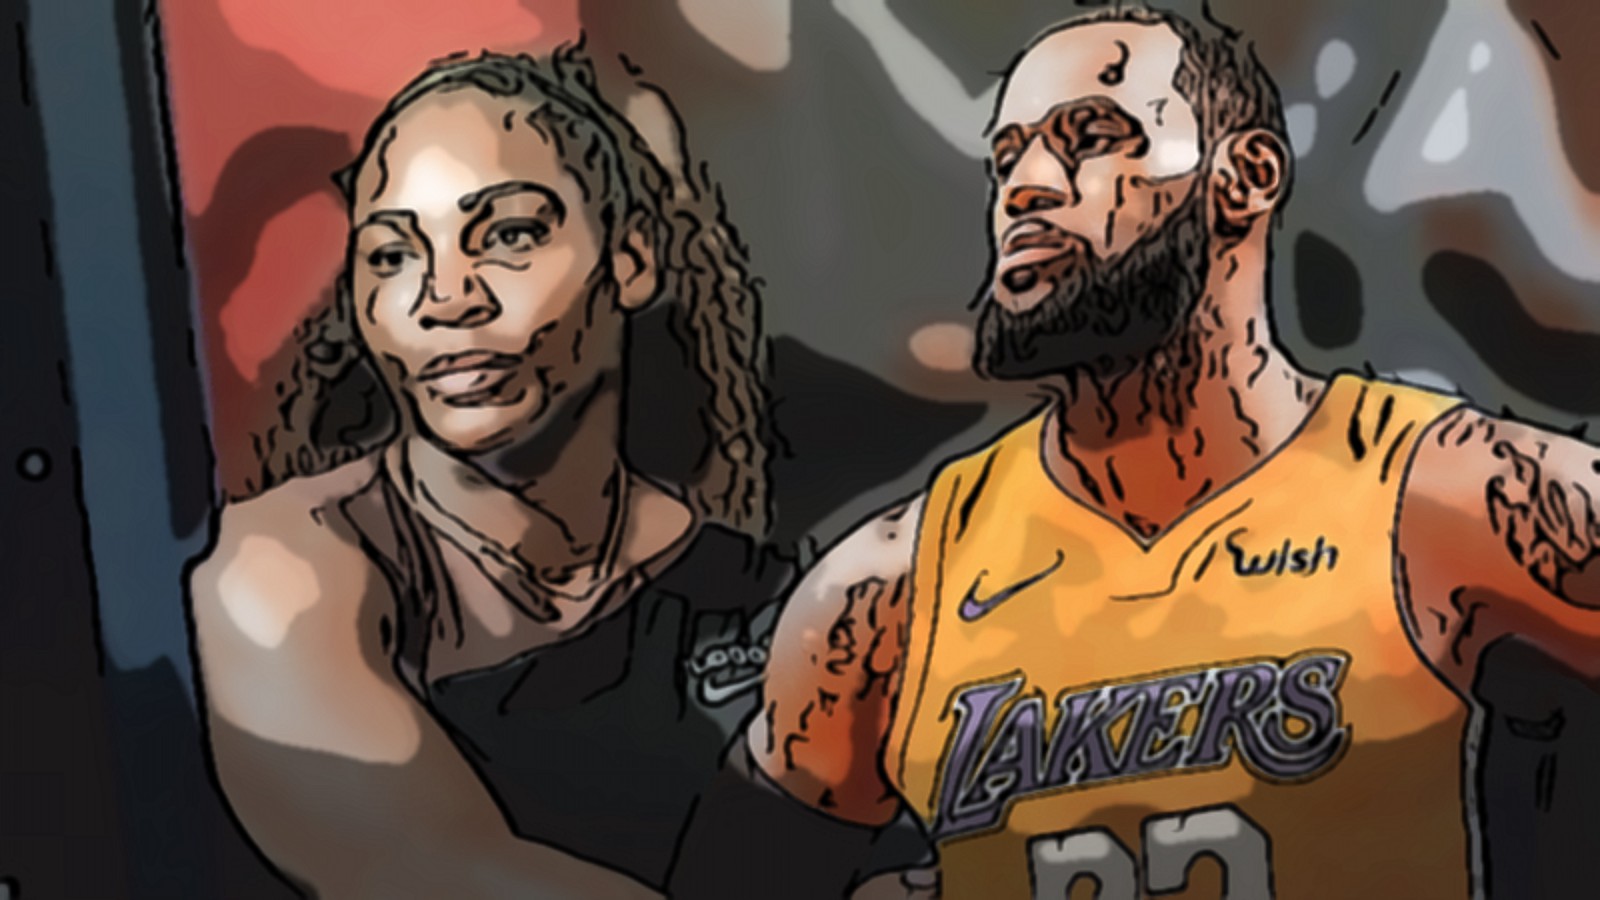 How LeBron James, Serena Williams & Drake help Reds win kit trial vs New  Balance